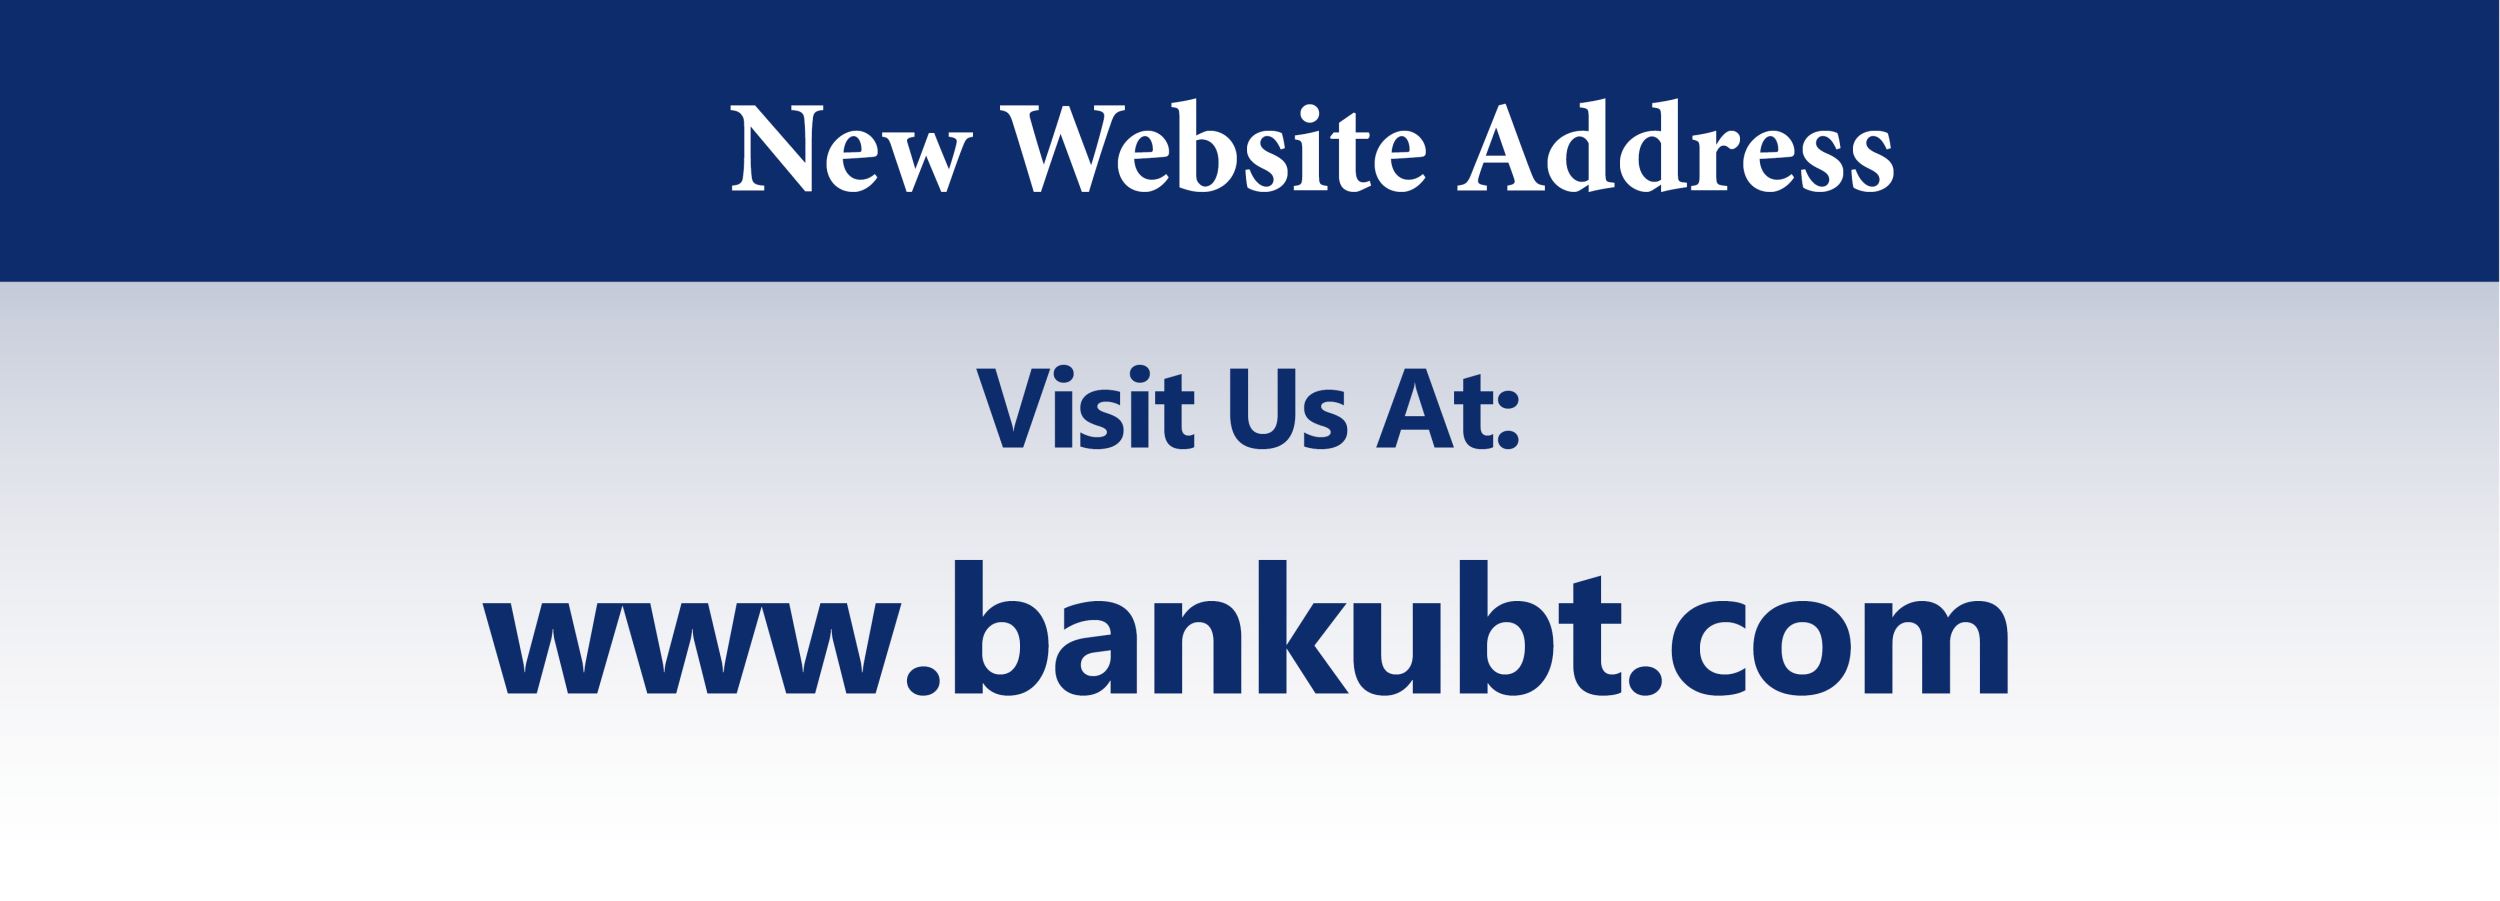 New Website Address - www.bankubt.com thumbnail